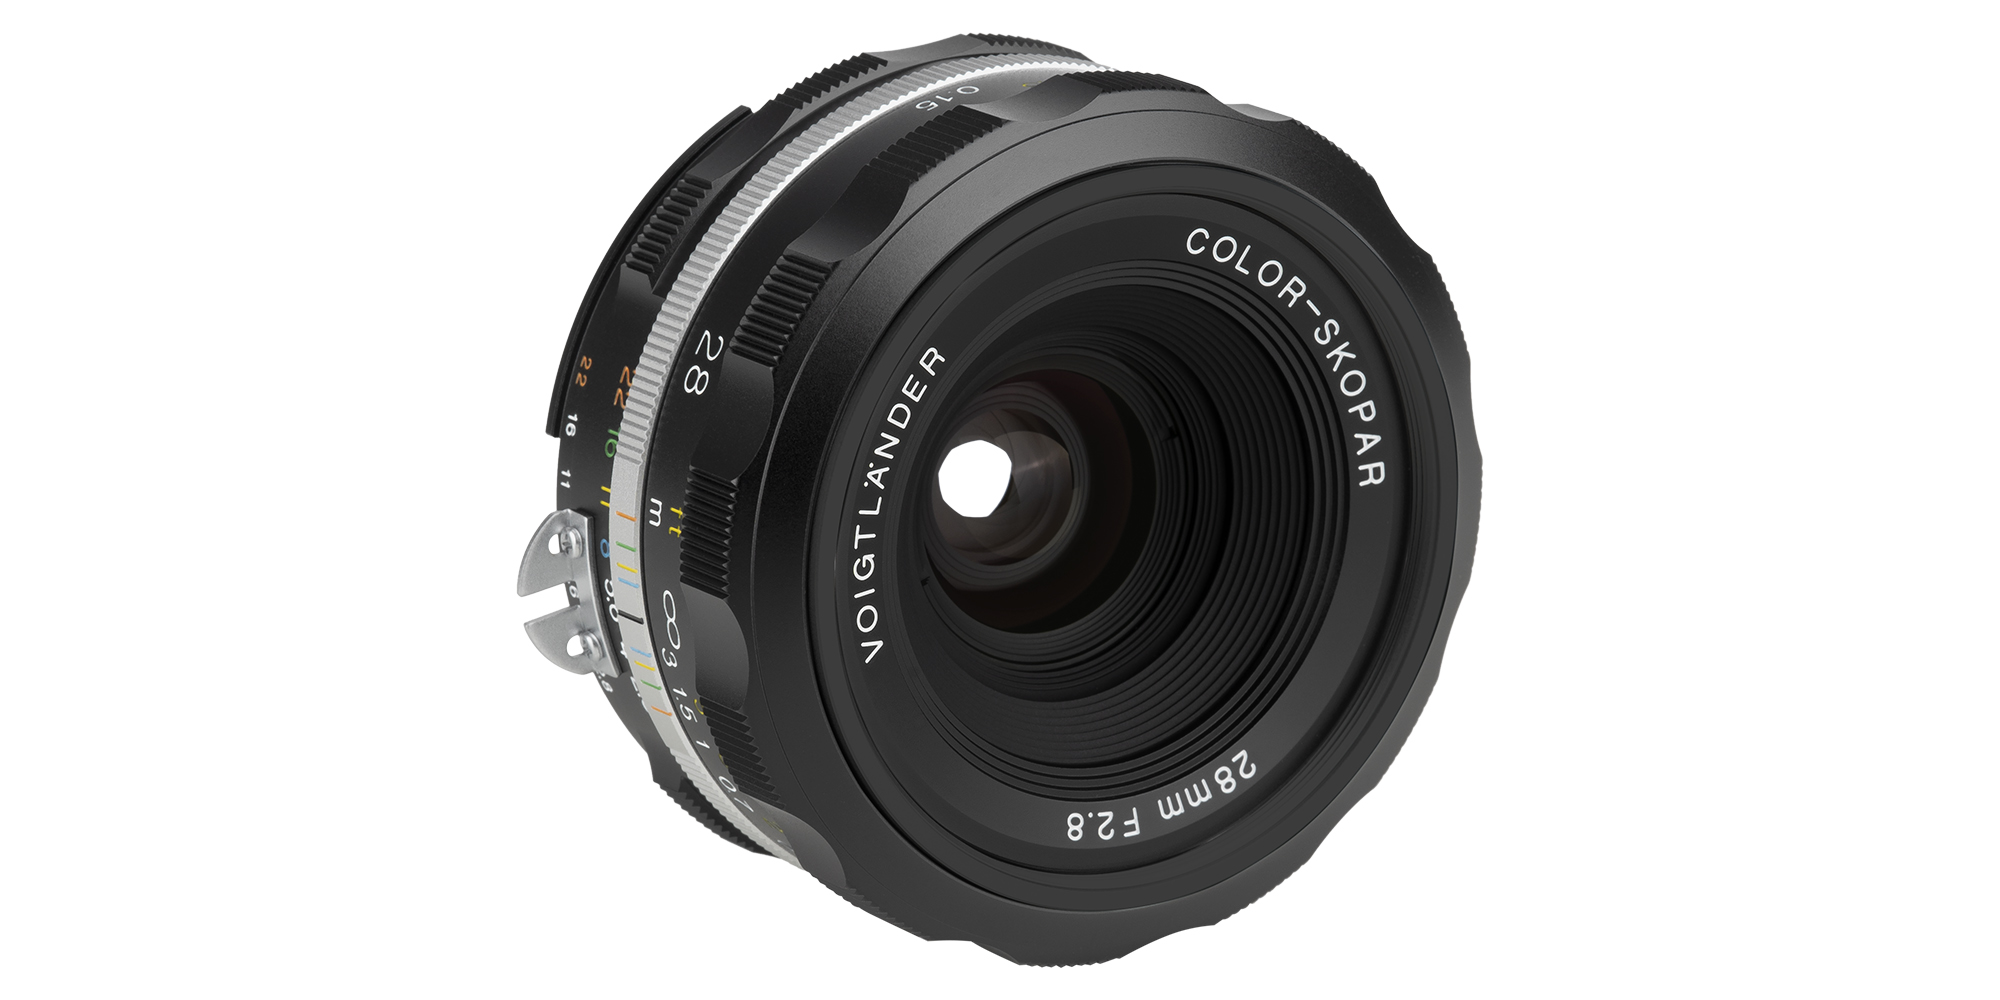 Voigtlander Color Skopar SL IIs 28mm f/2.8 lens for Nikon F - Black - Smooth control of light